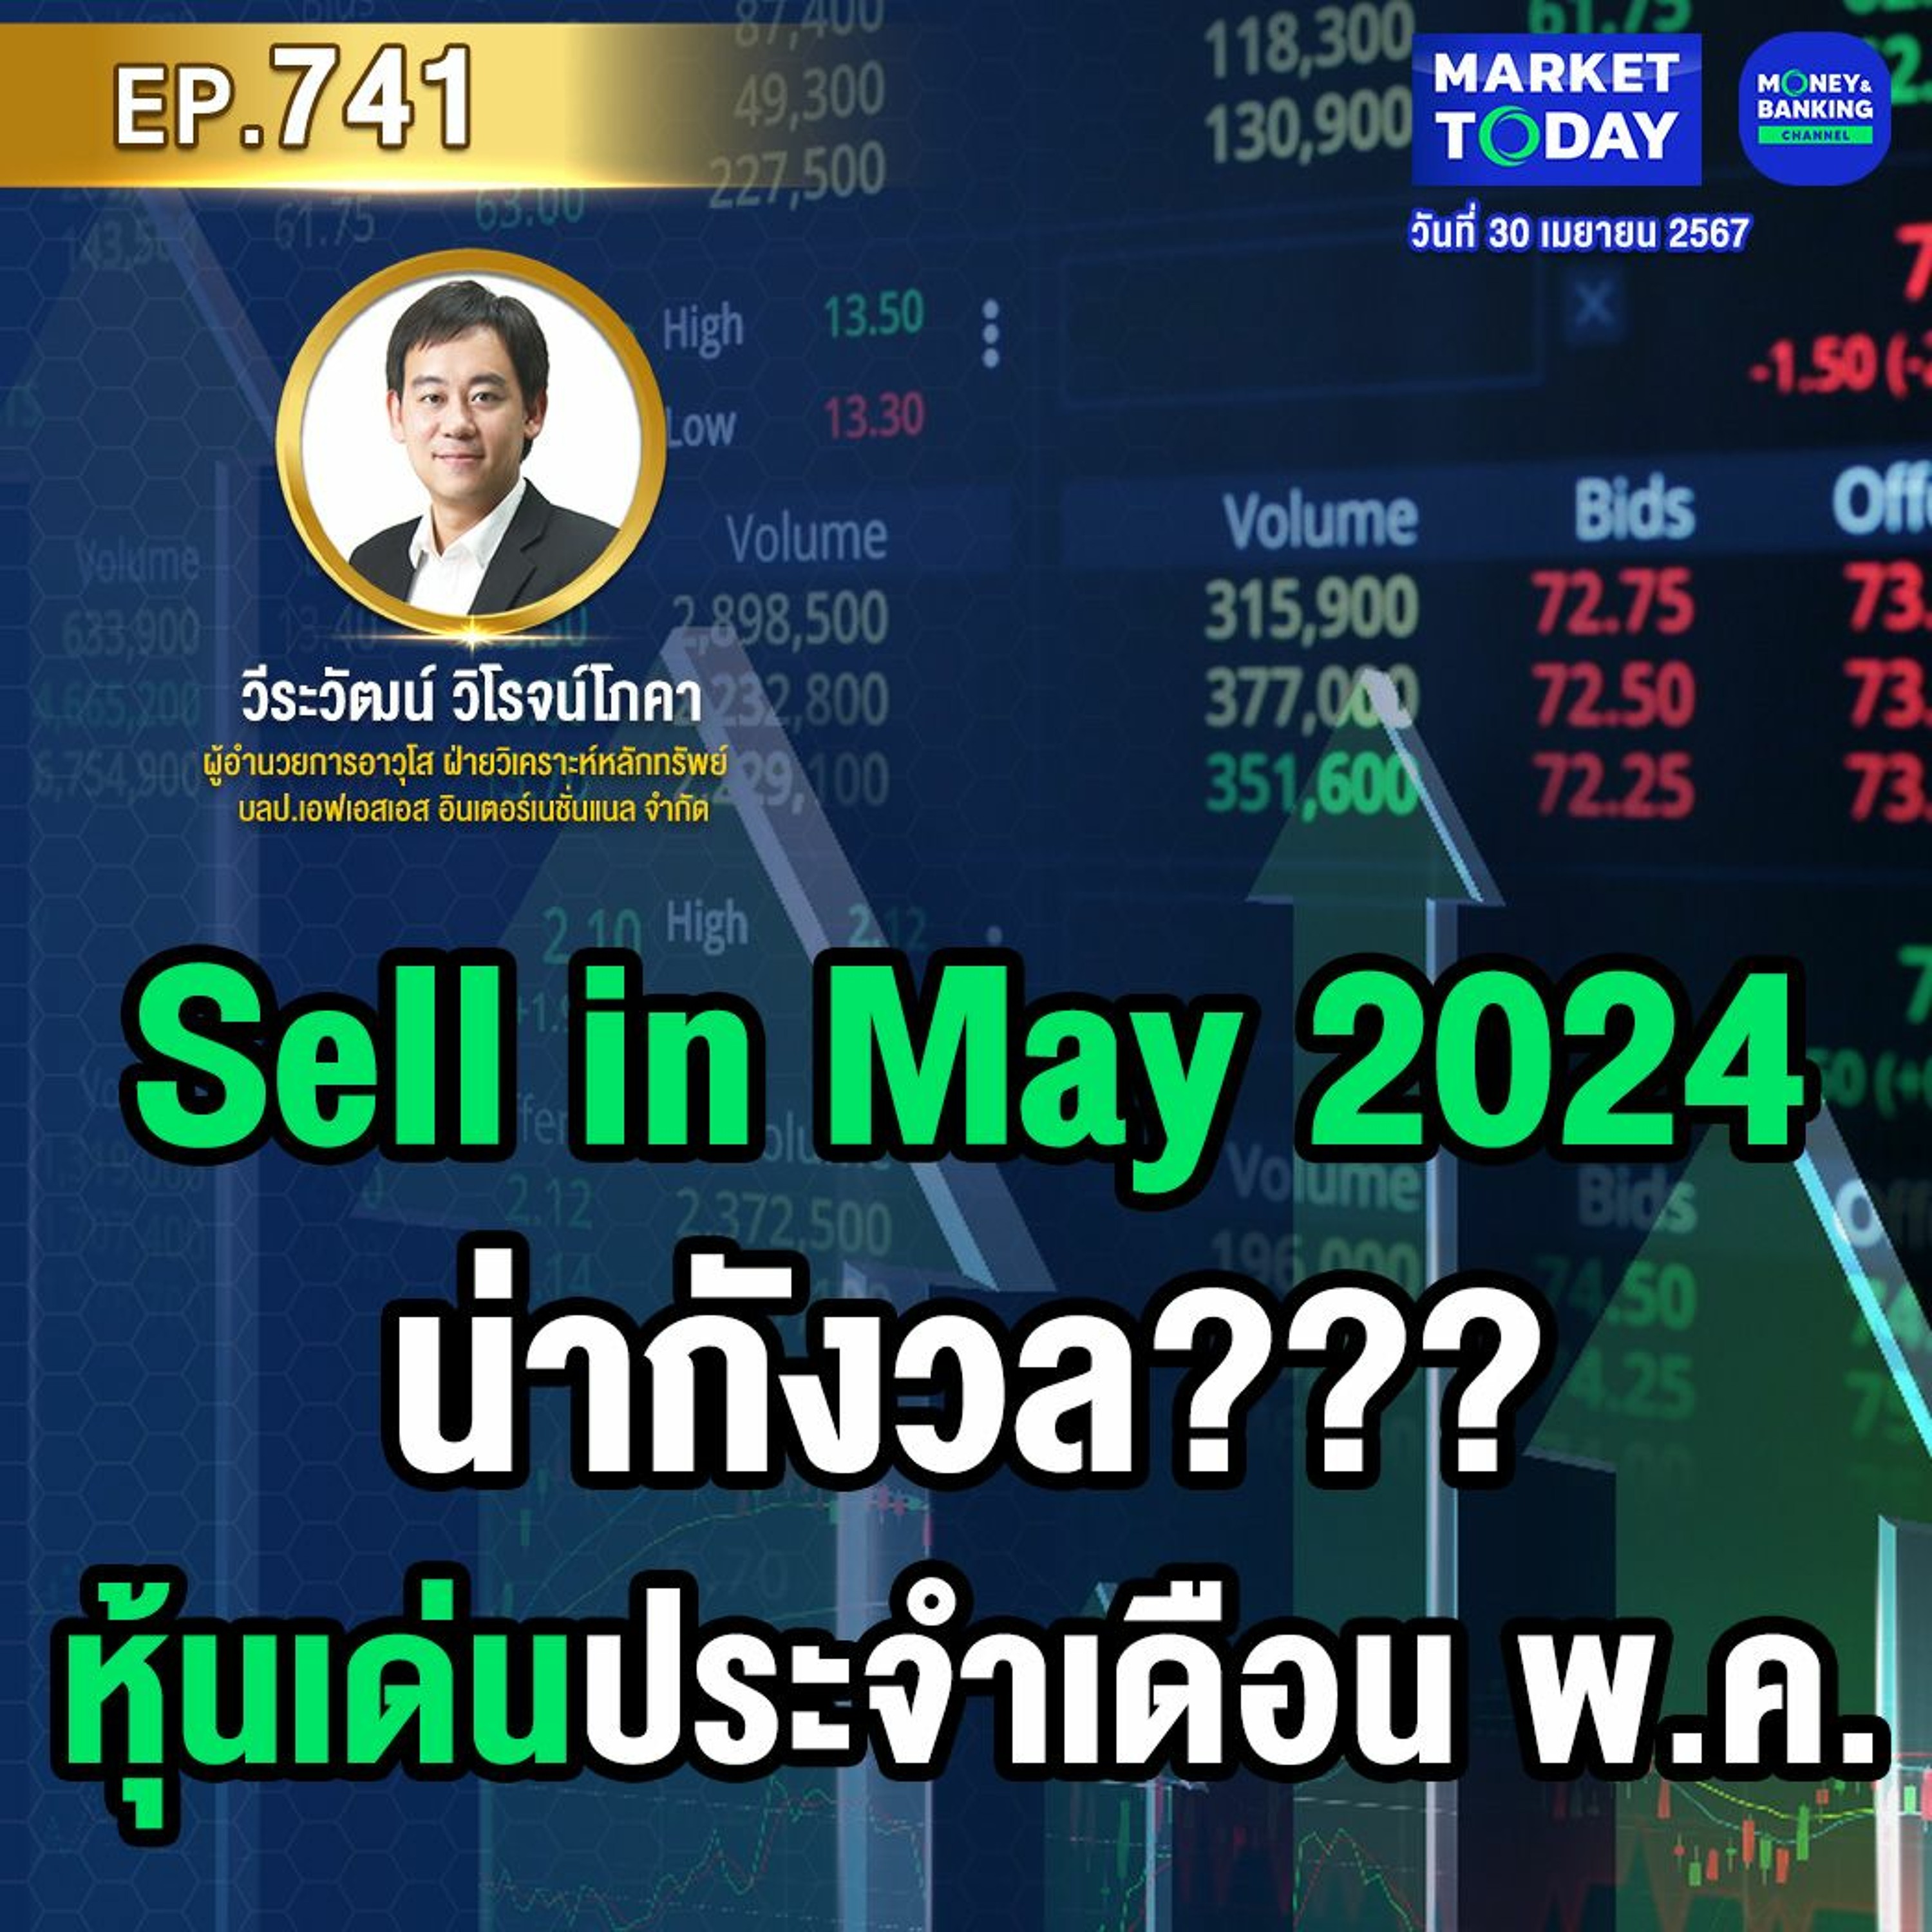 Market Today EP.741 | Sell in May 2024 น่ากังวล? หุ้นเด่นประจำเดือนพฤษภา